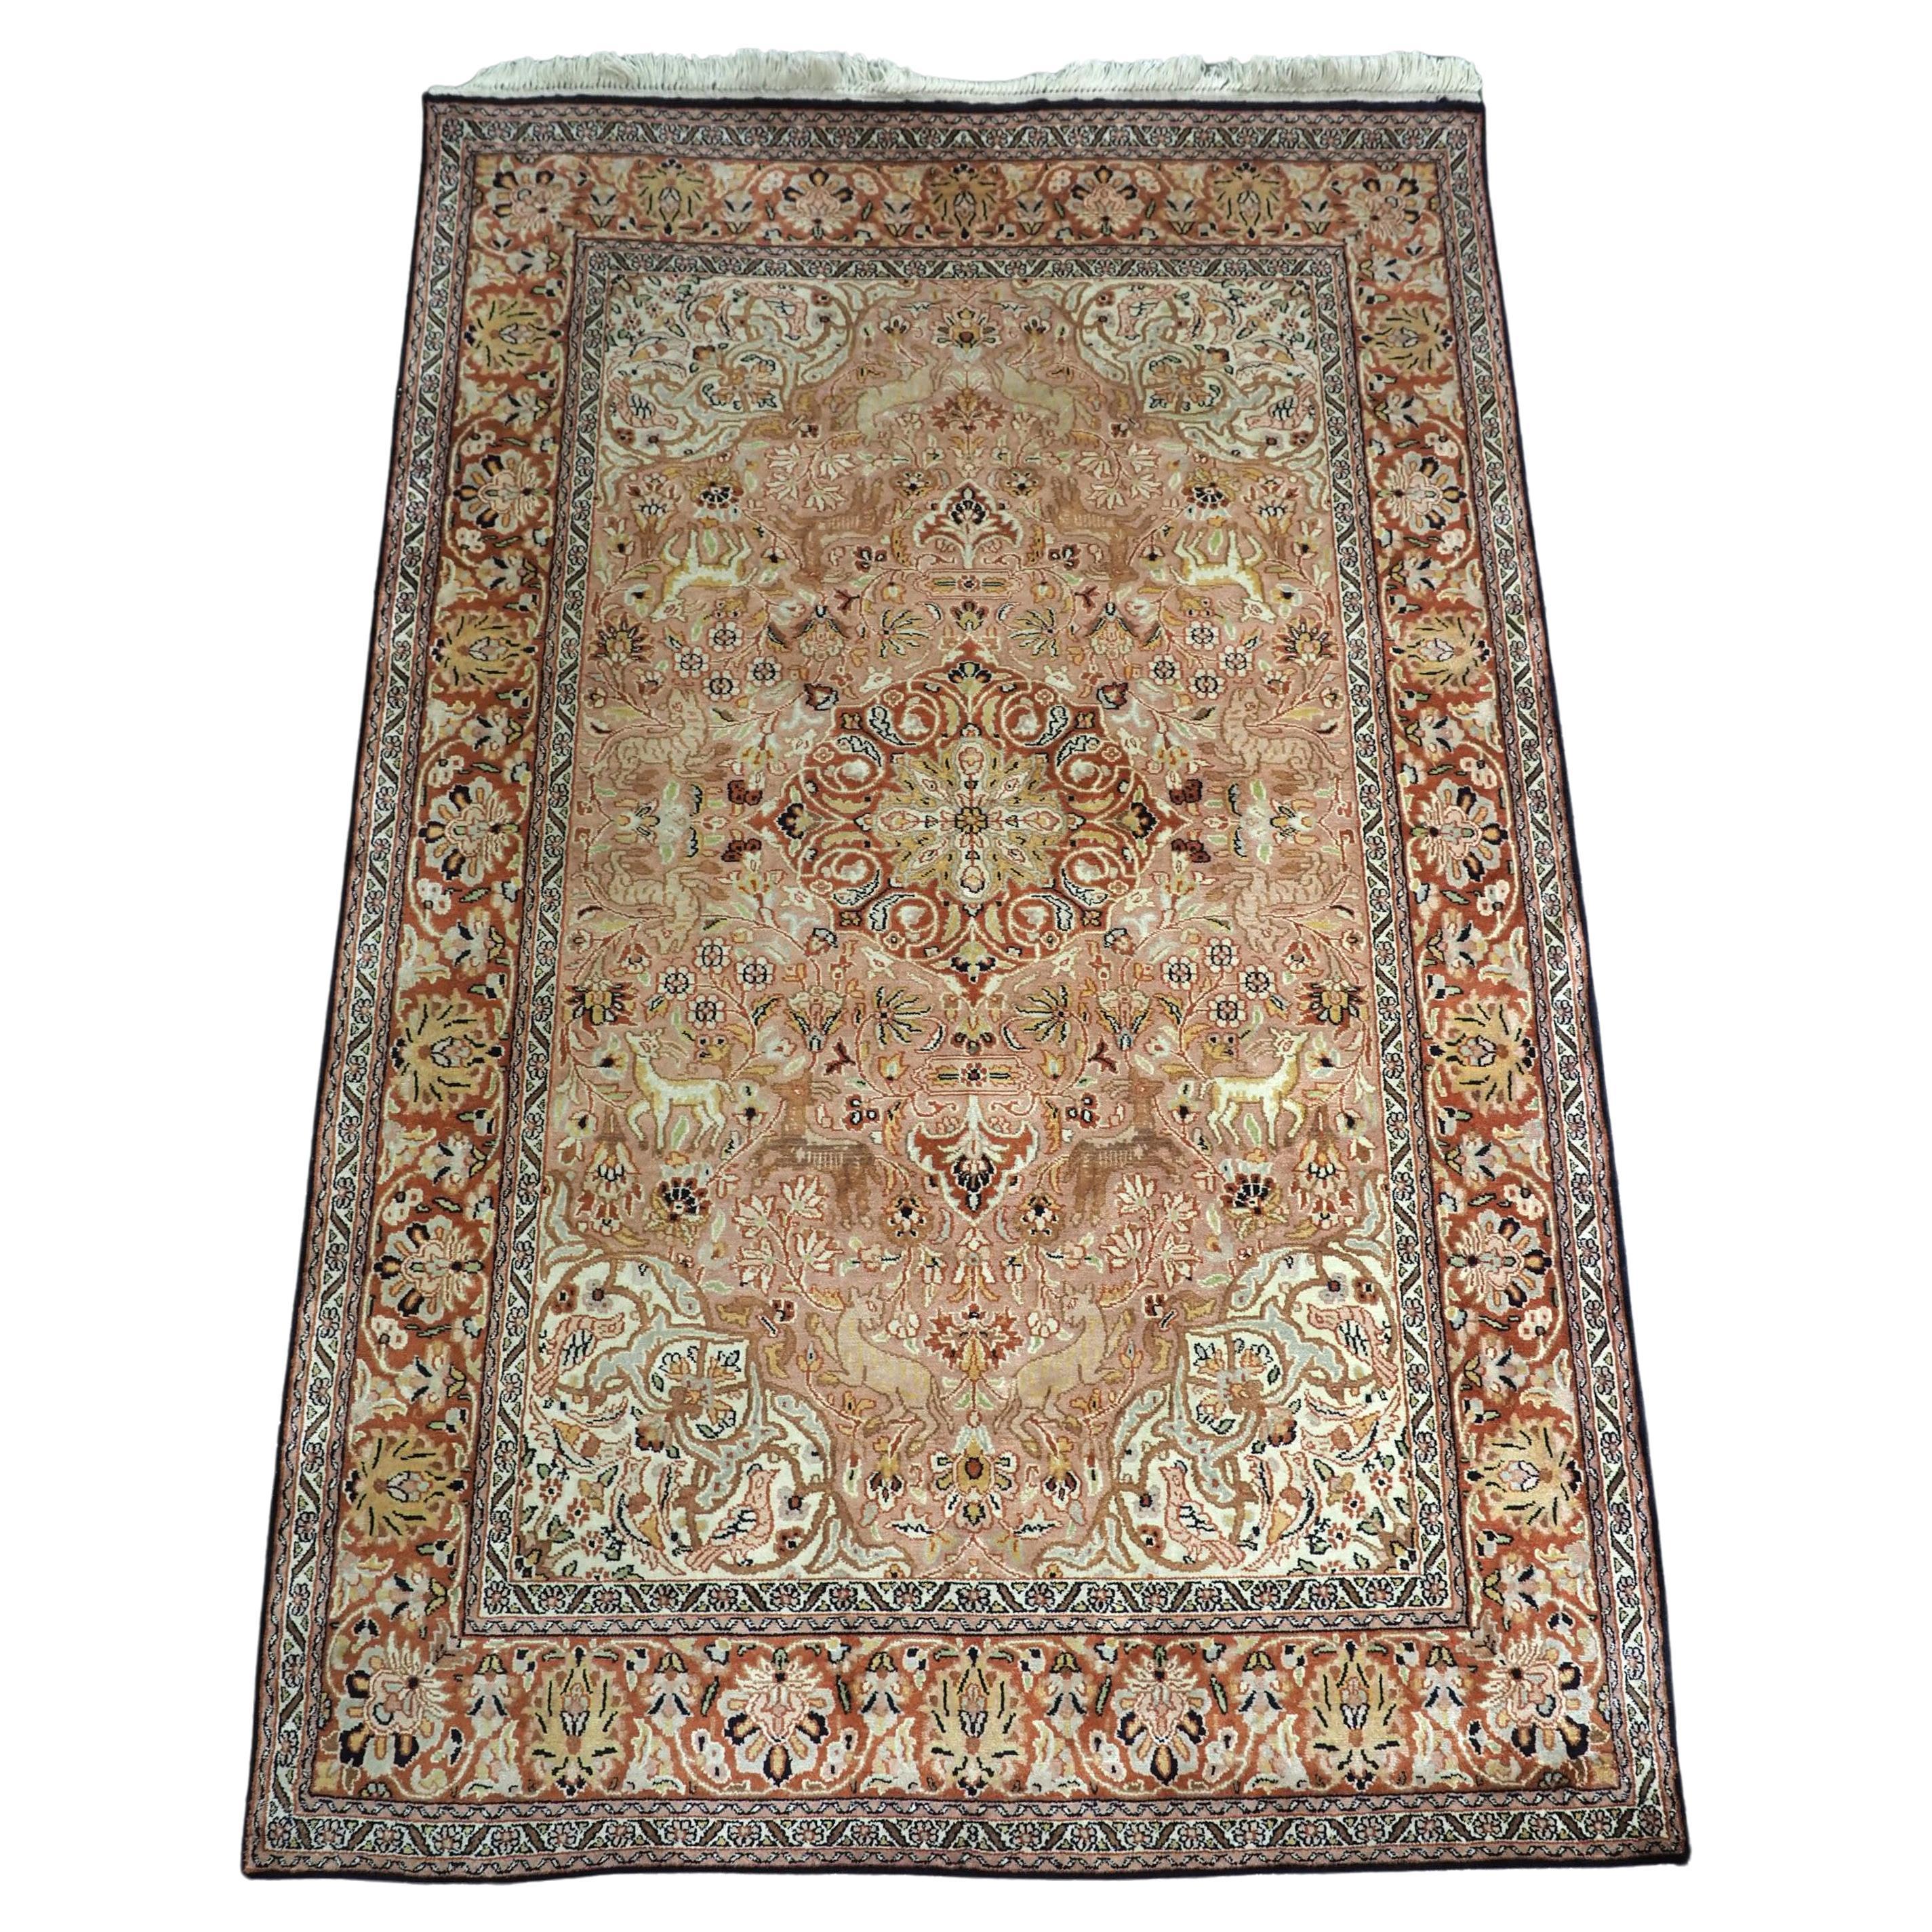 Kashmir silk rug with a small medallion design in garden of animals & flowers.